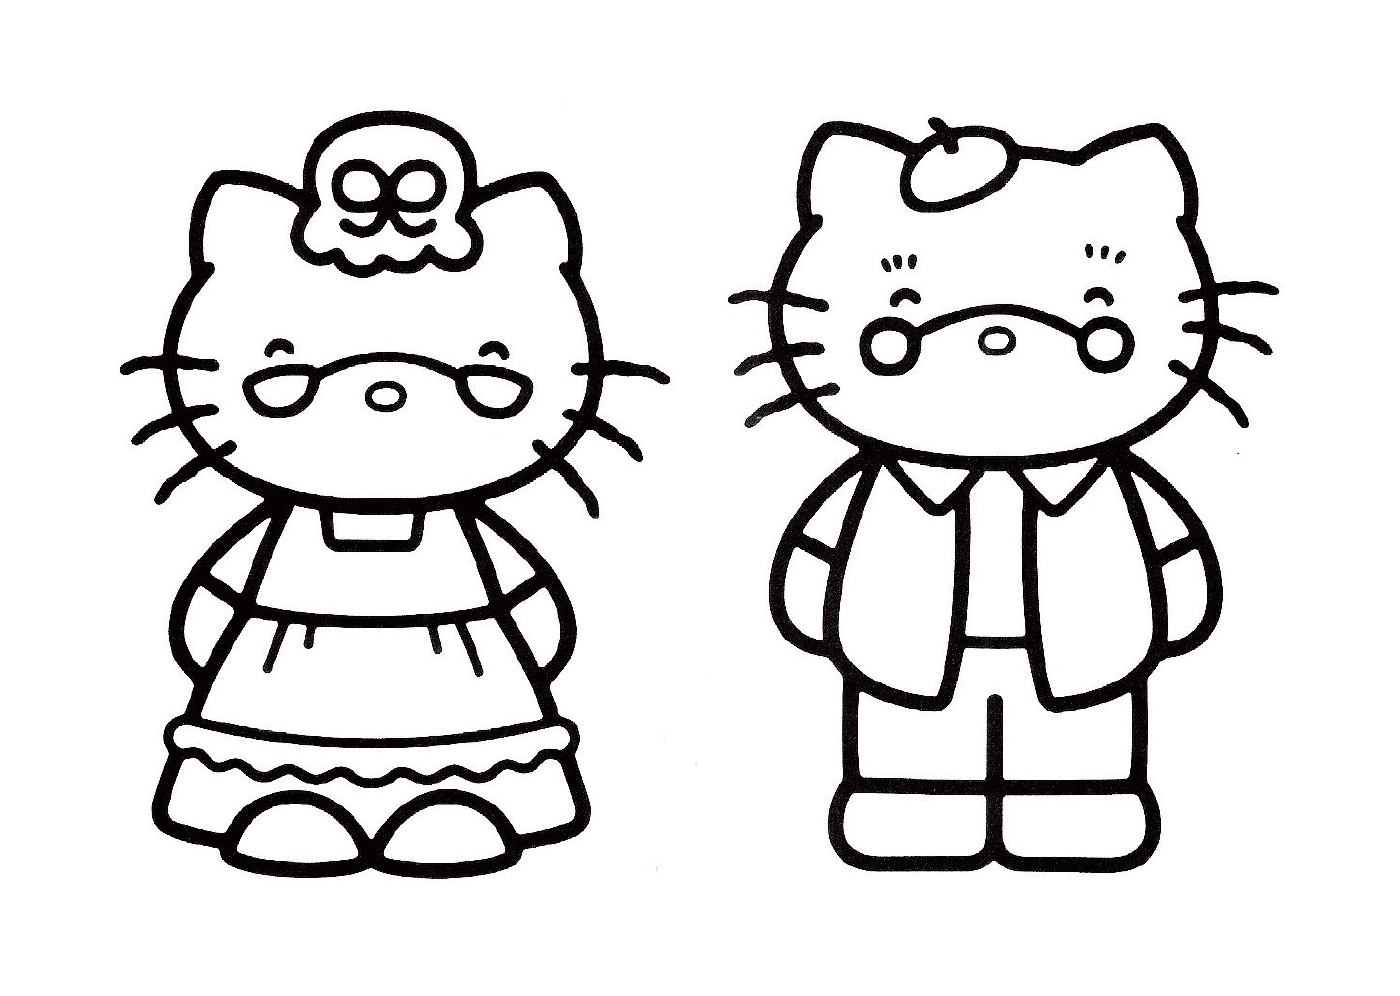  Dos personajes de Hello Kitty 